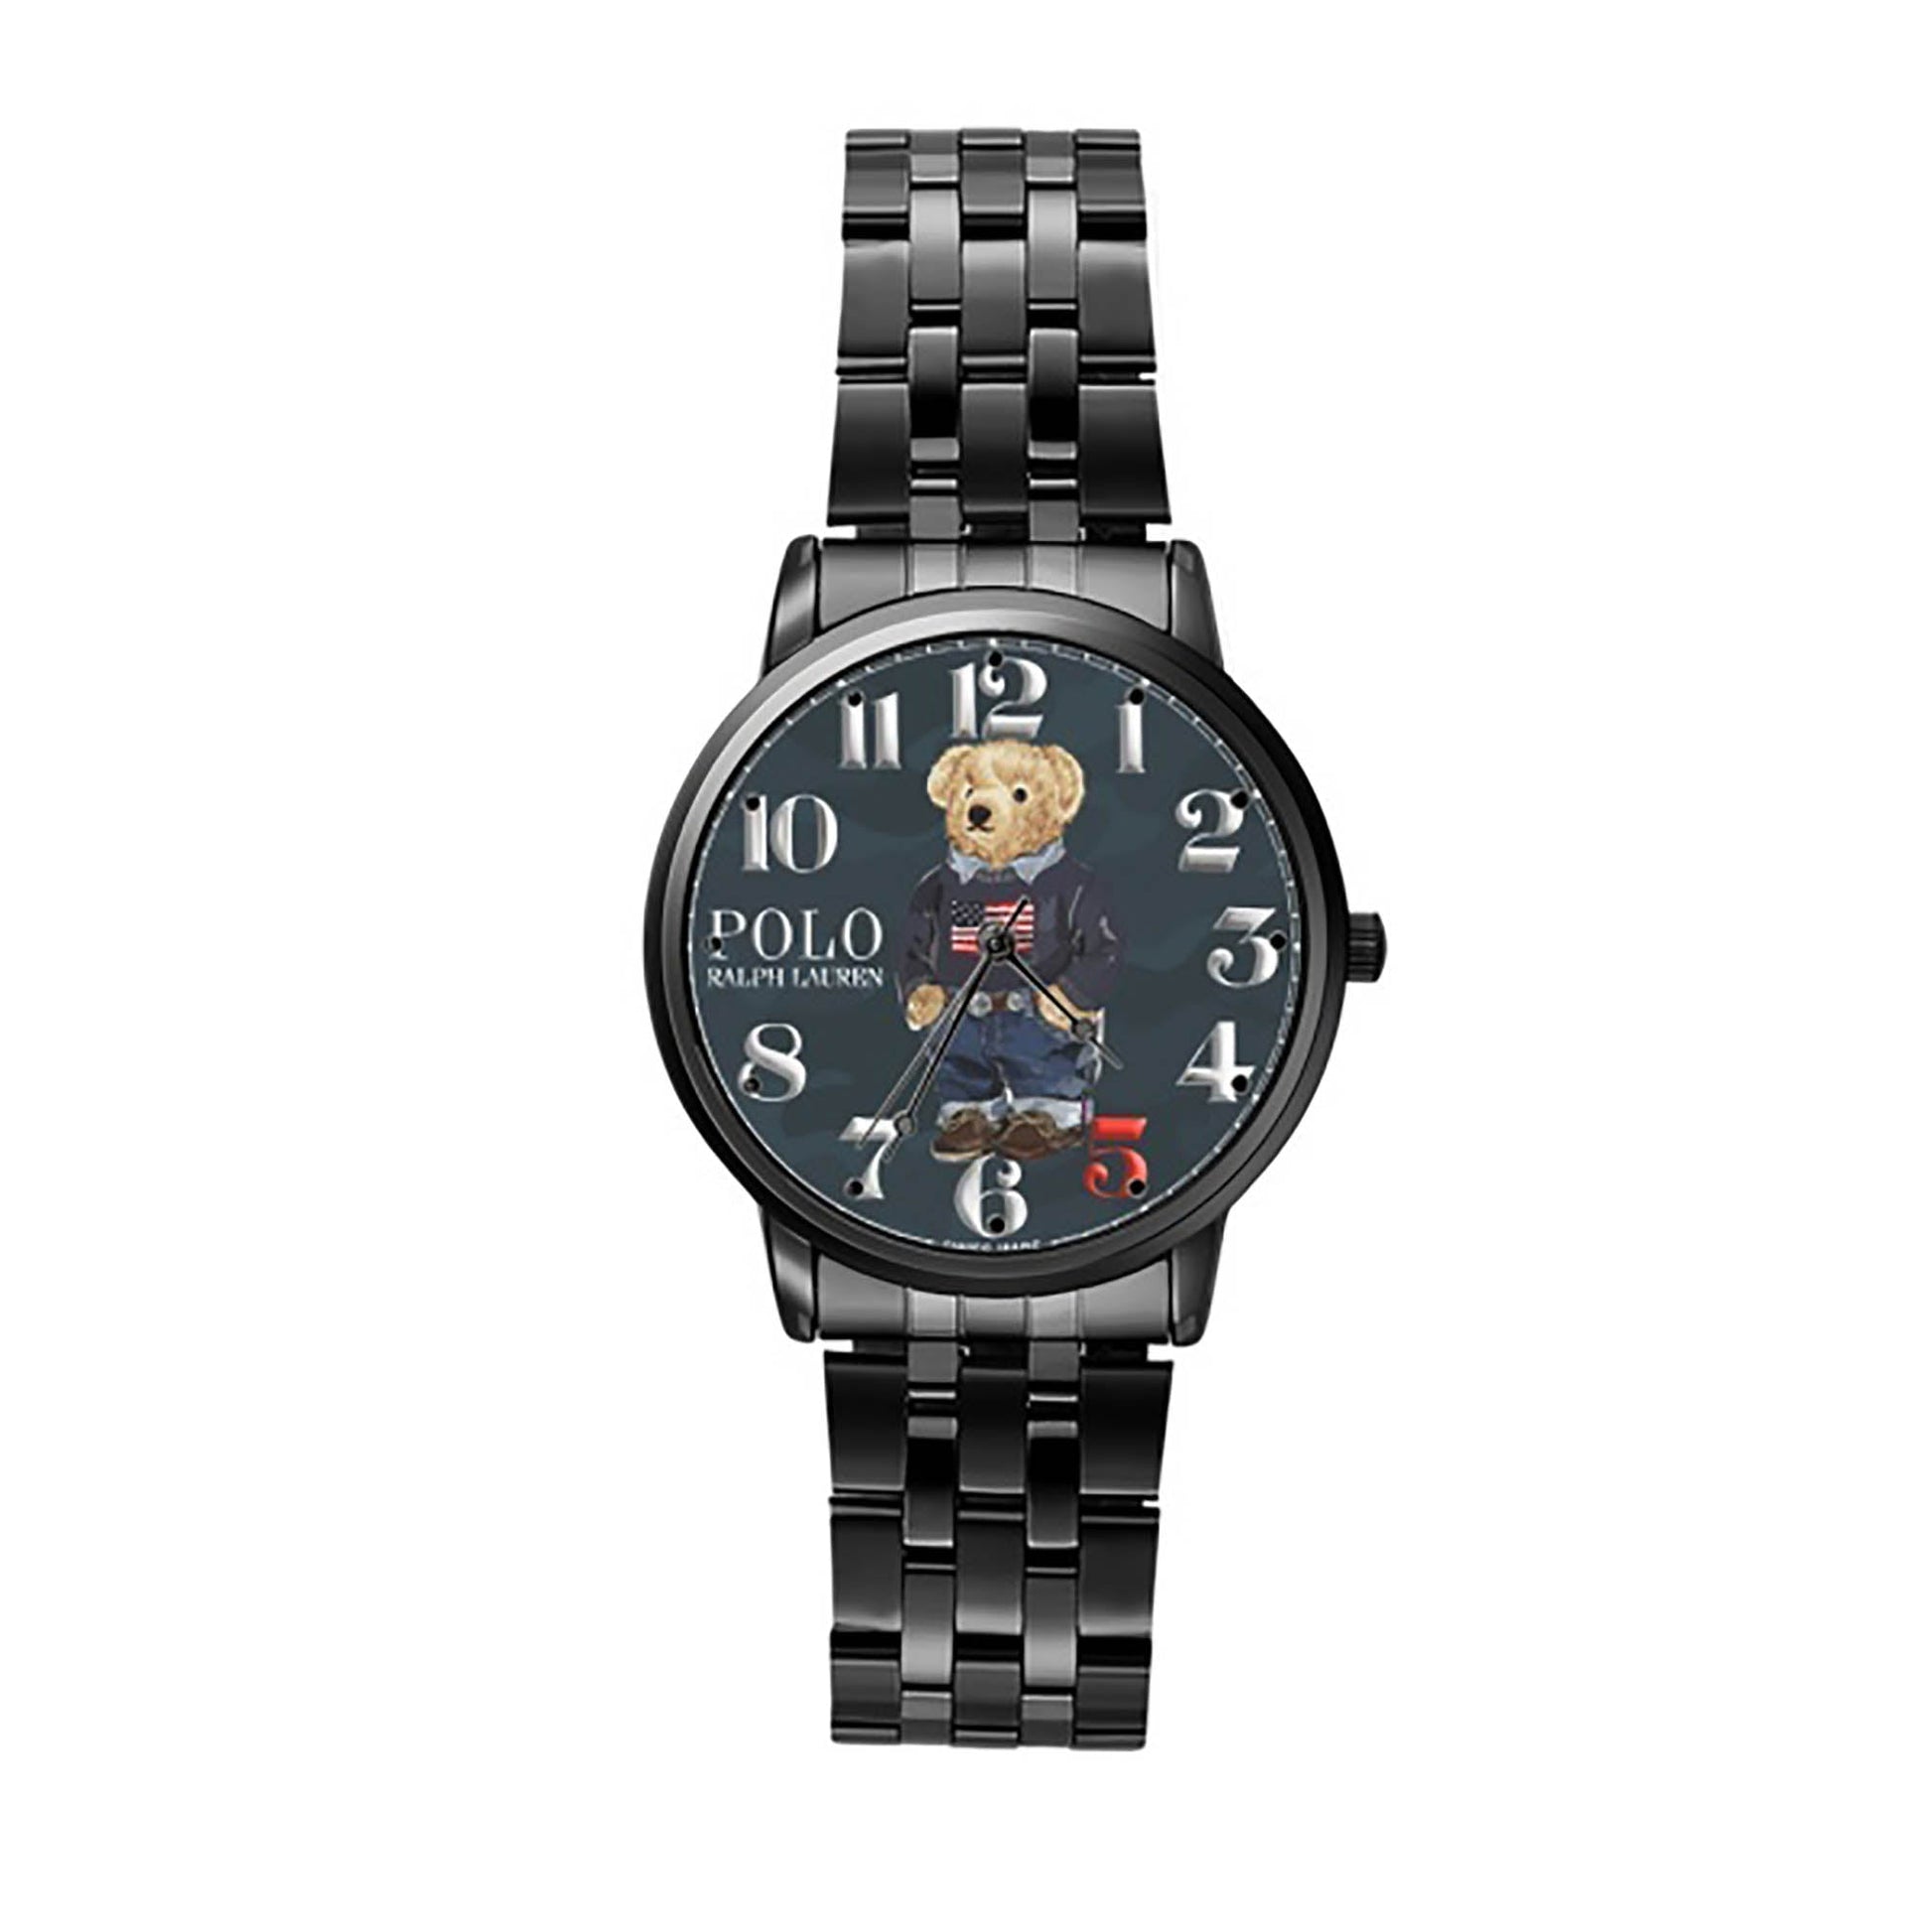 Polo Bear Military Sport Metal Watch ST55